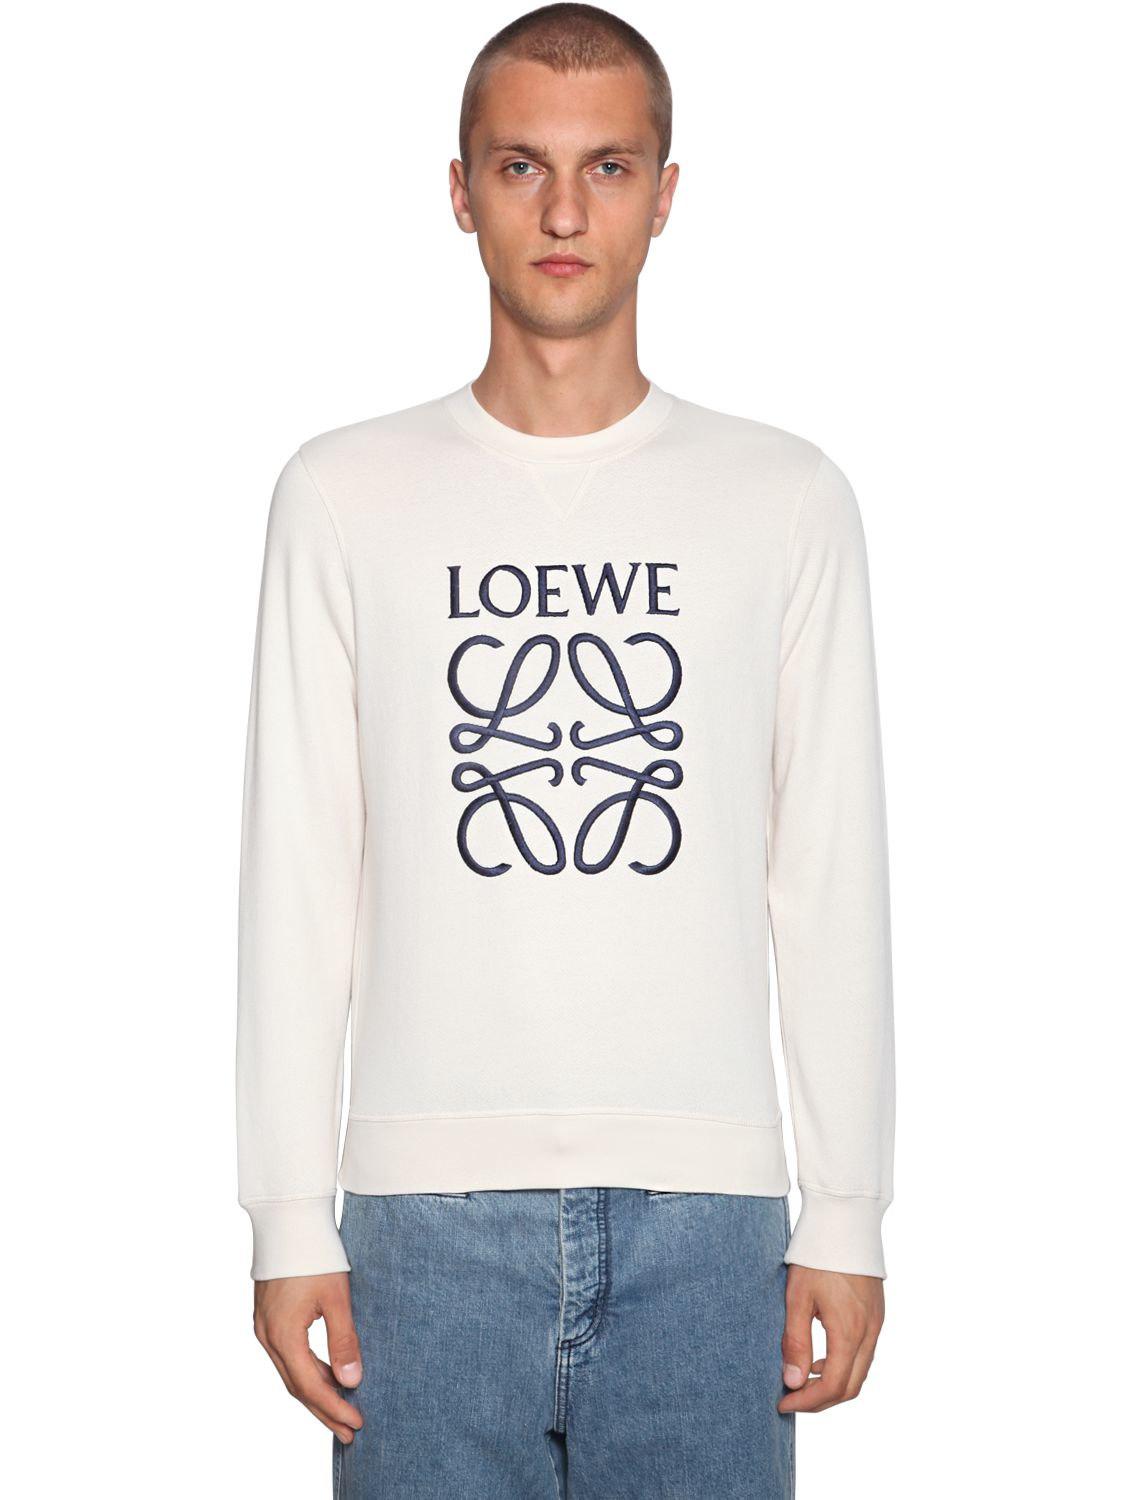 loewe anagram embroidered sweatshirt Off 76% - www.gmcanantnag.net